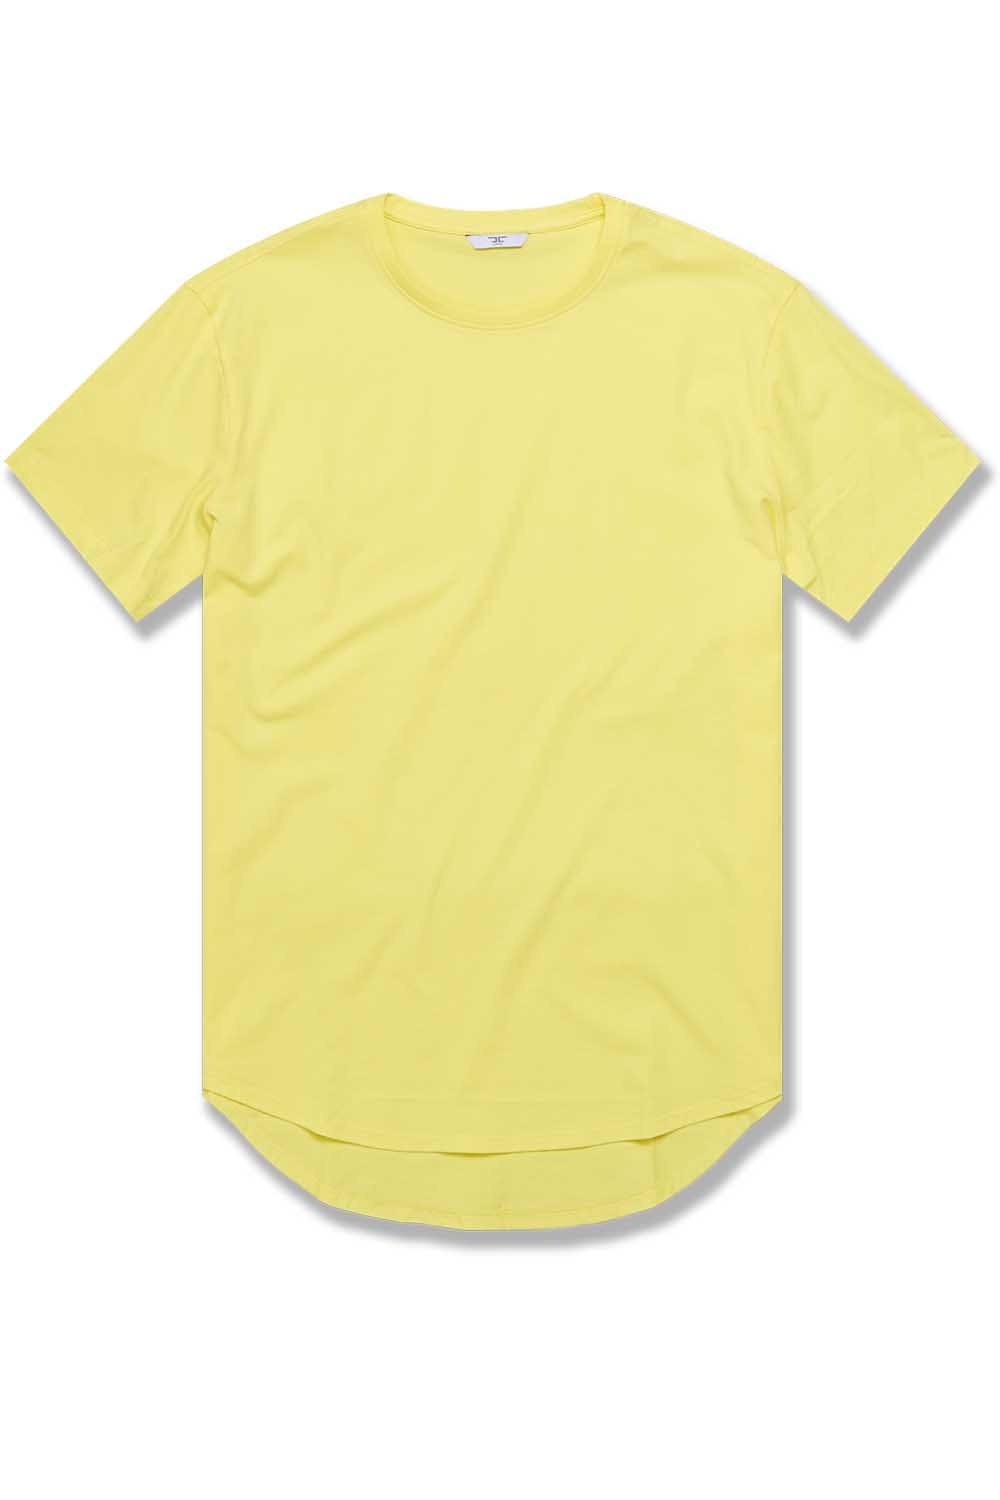 JC Big Men Big Men's Scallop T-Shirt (Name Your Price) Rowing Gold / 4XL